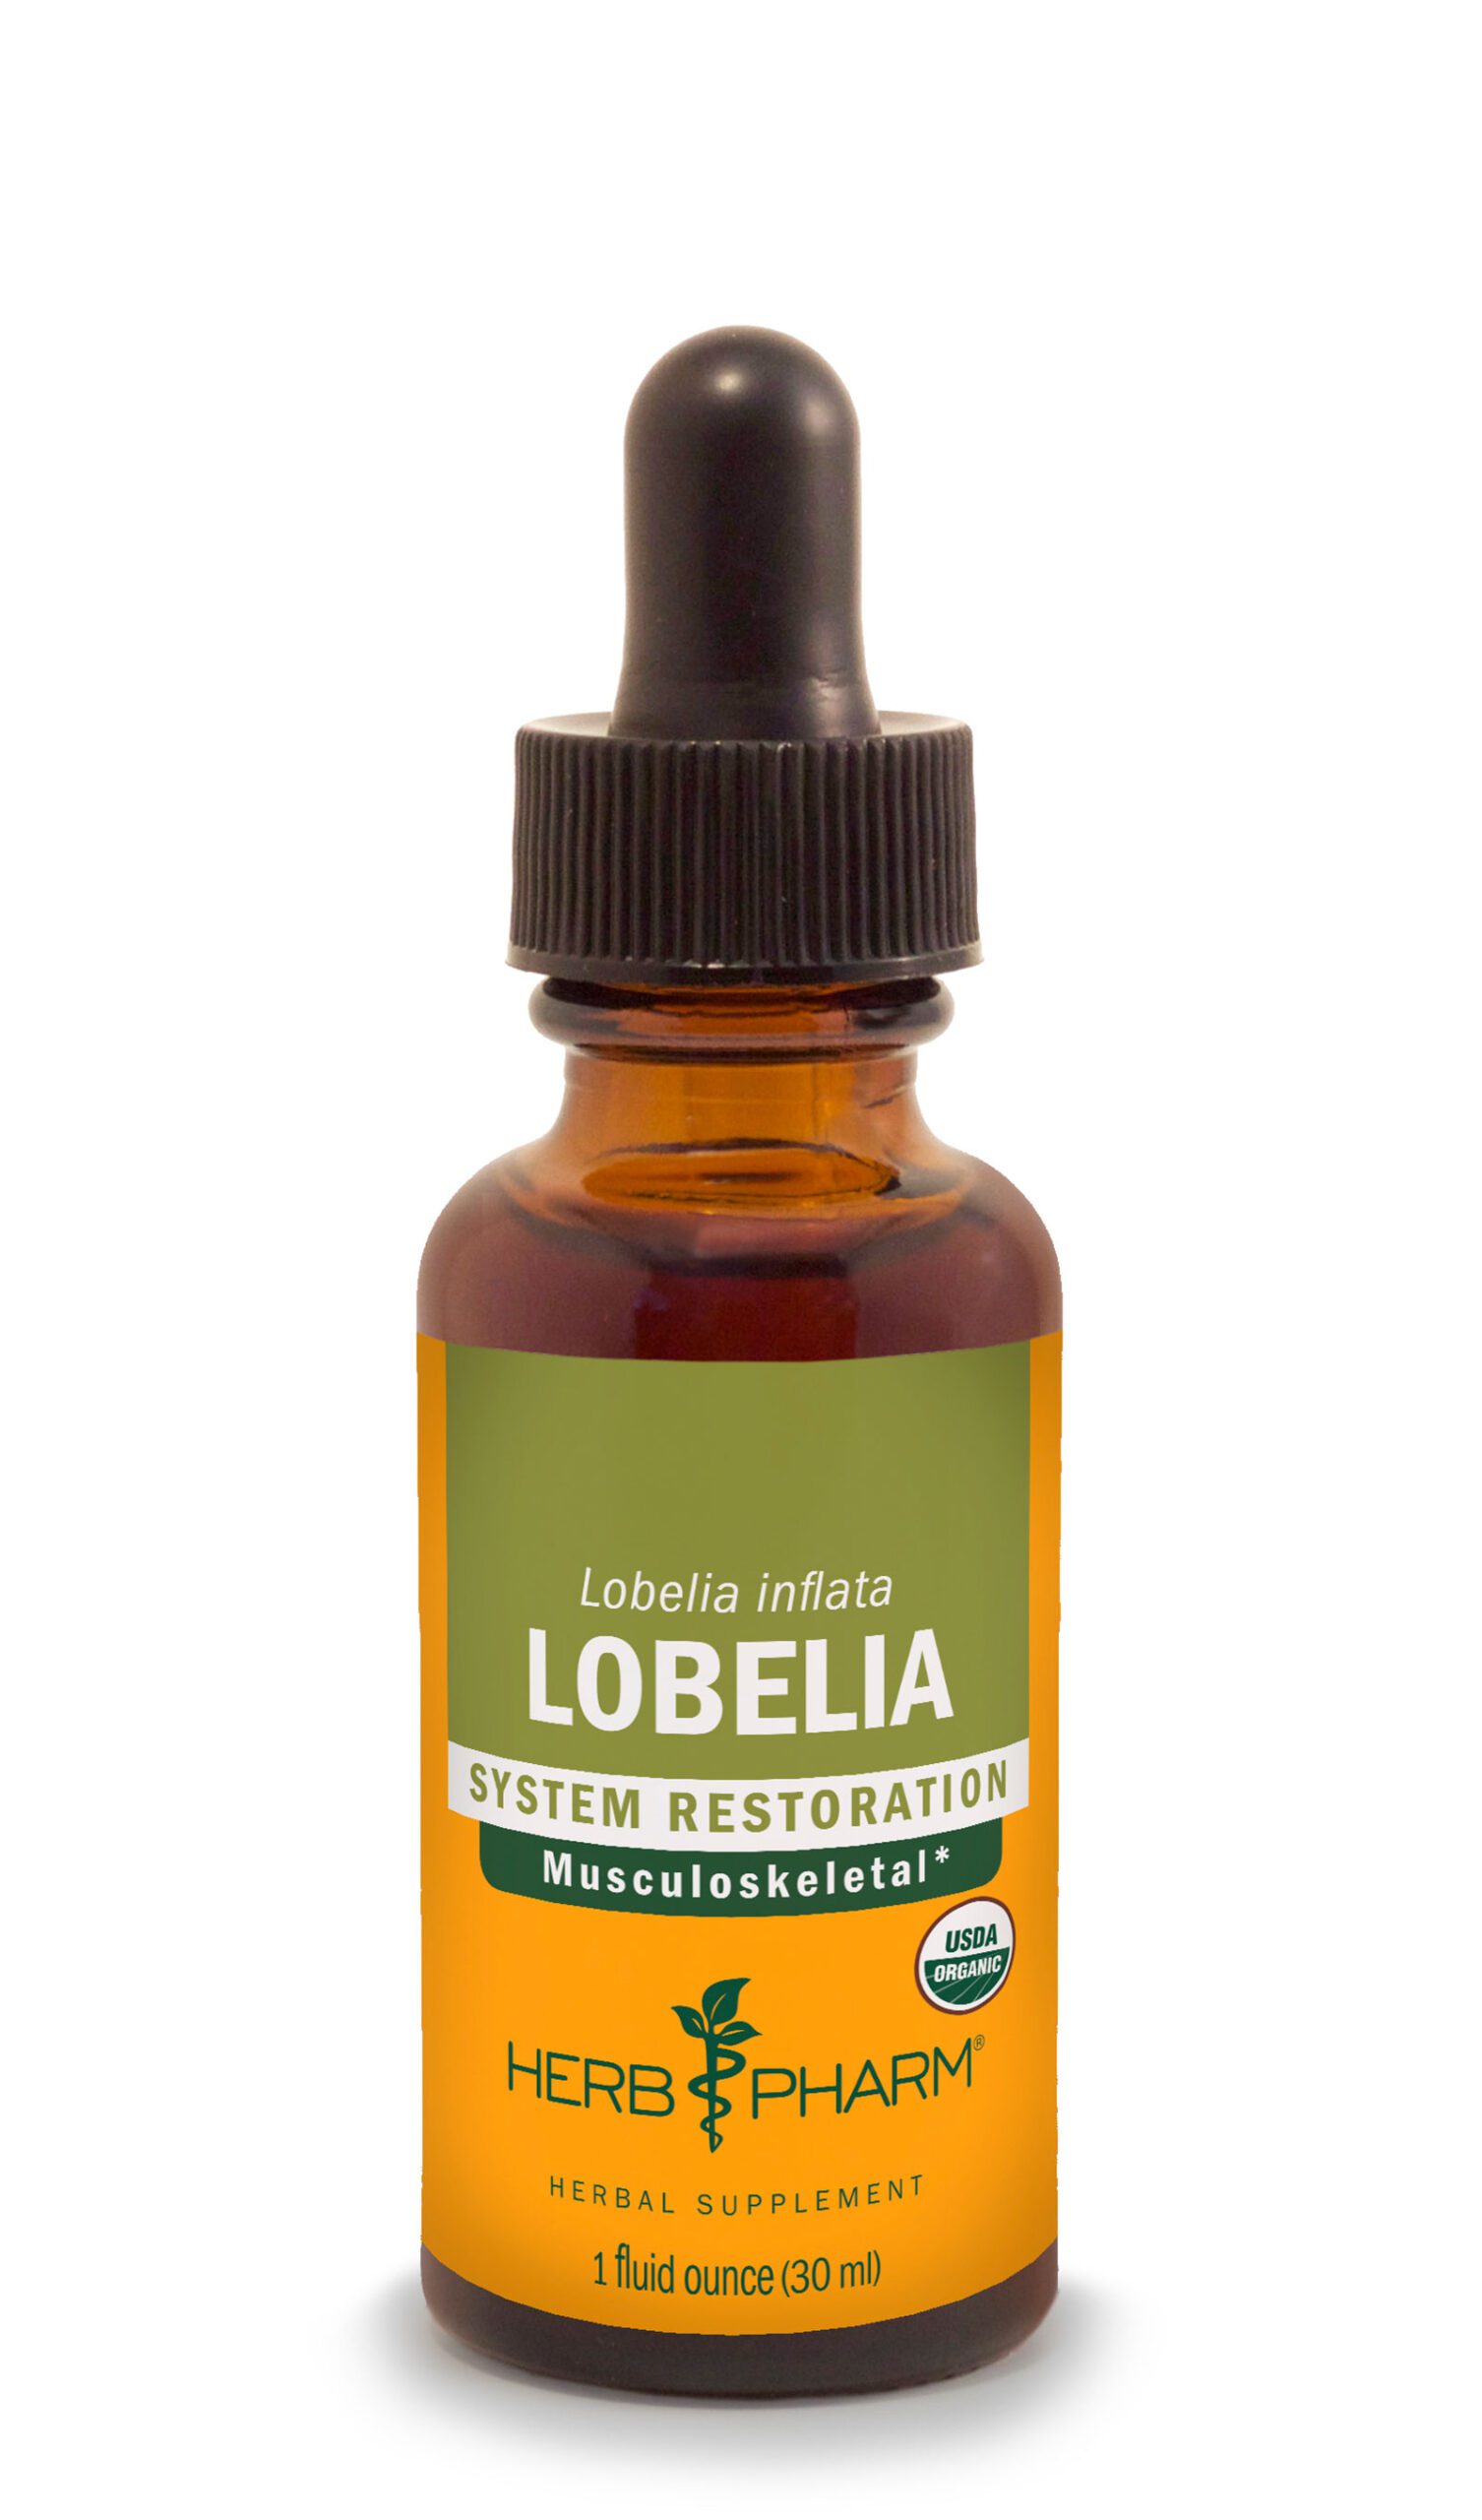 Product Listing Image for Herb Pharm Lobelia Tincture 1oz